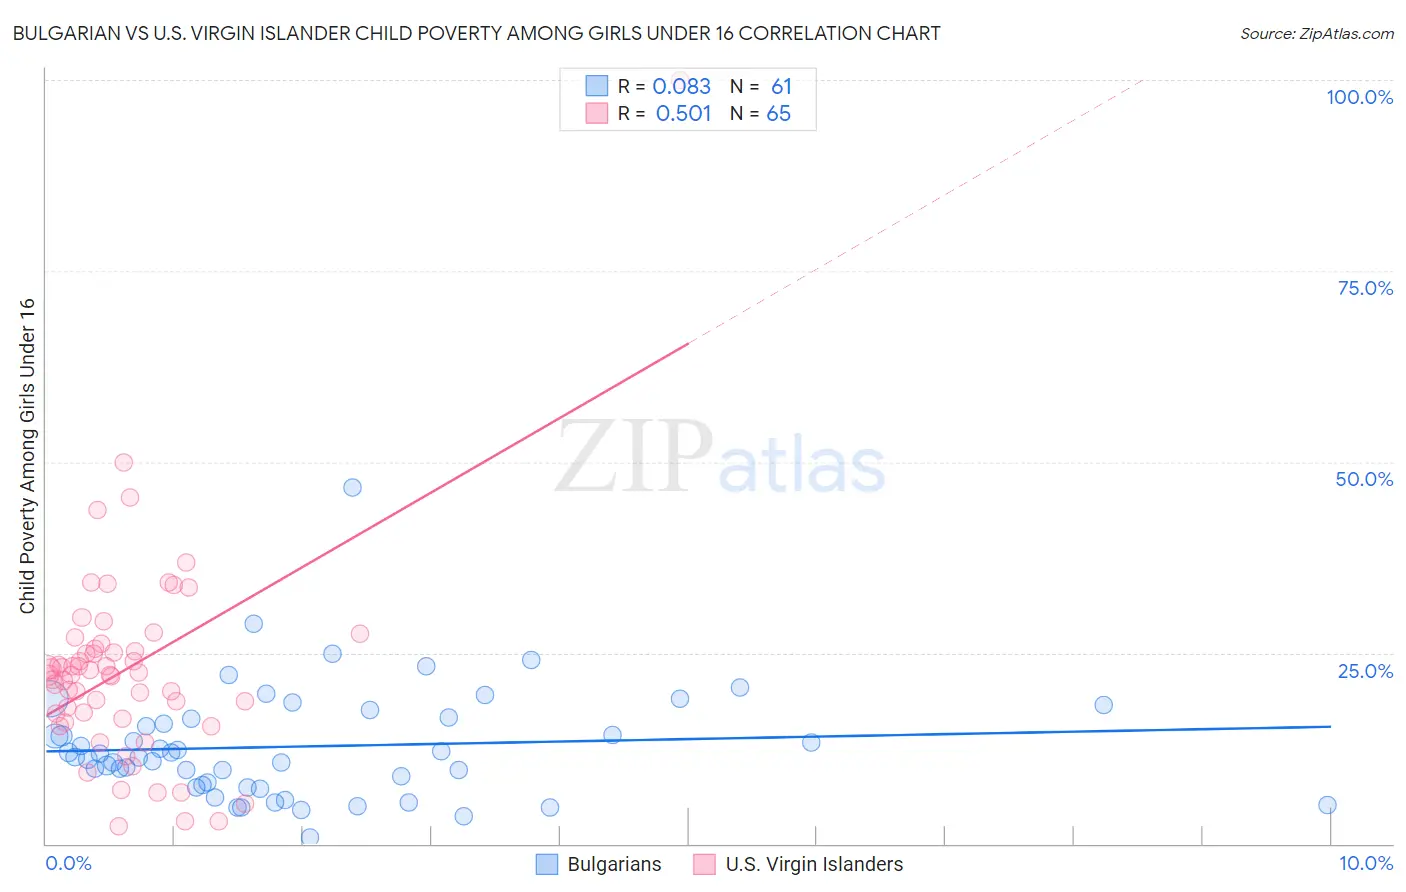 Bulgarian vs U.S. Virgin Islander Child Poverty Among Girls Under 16